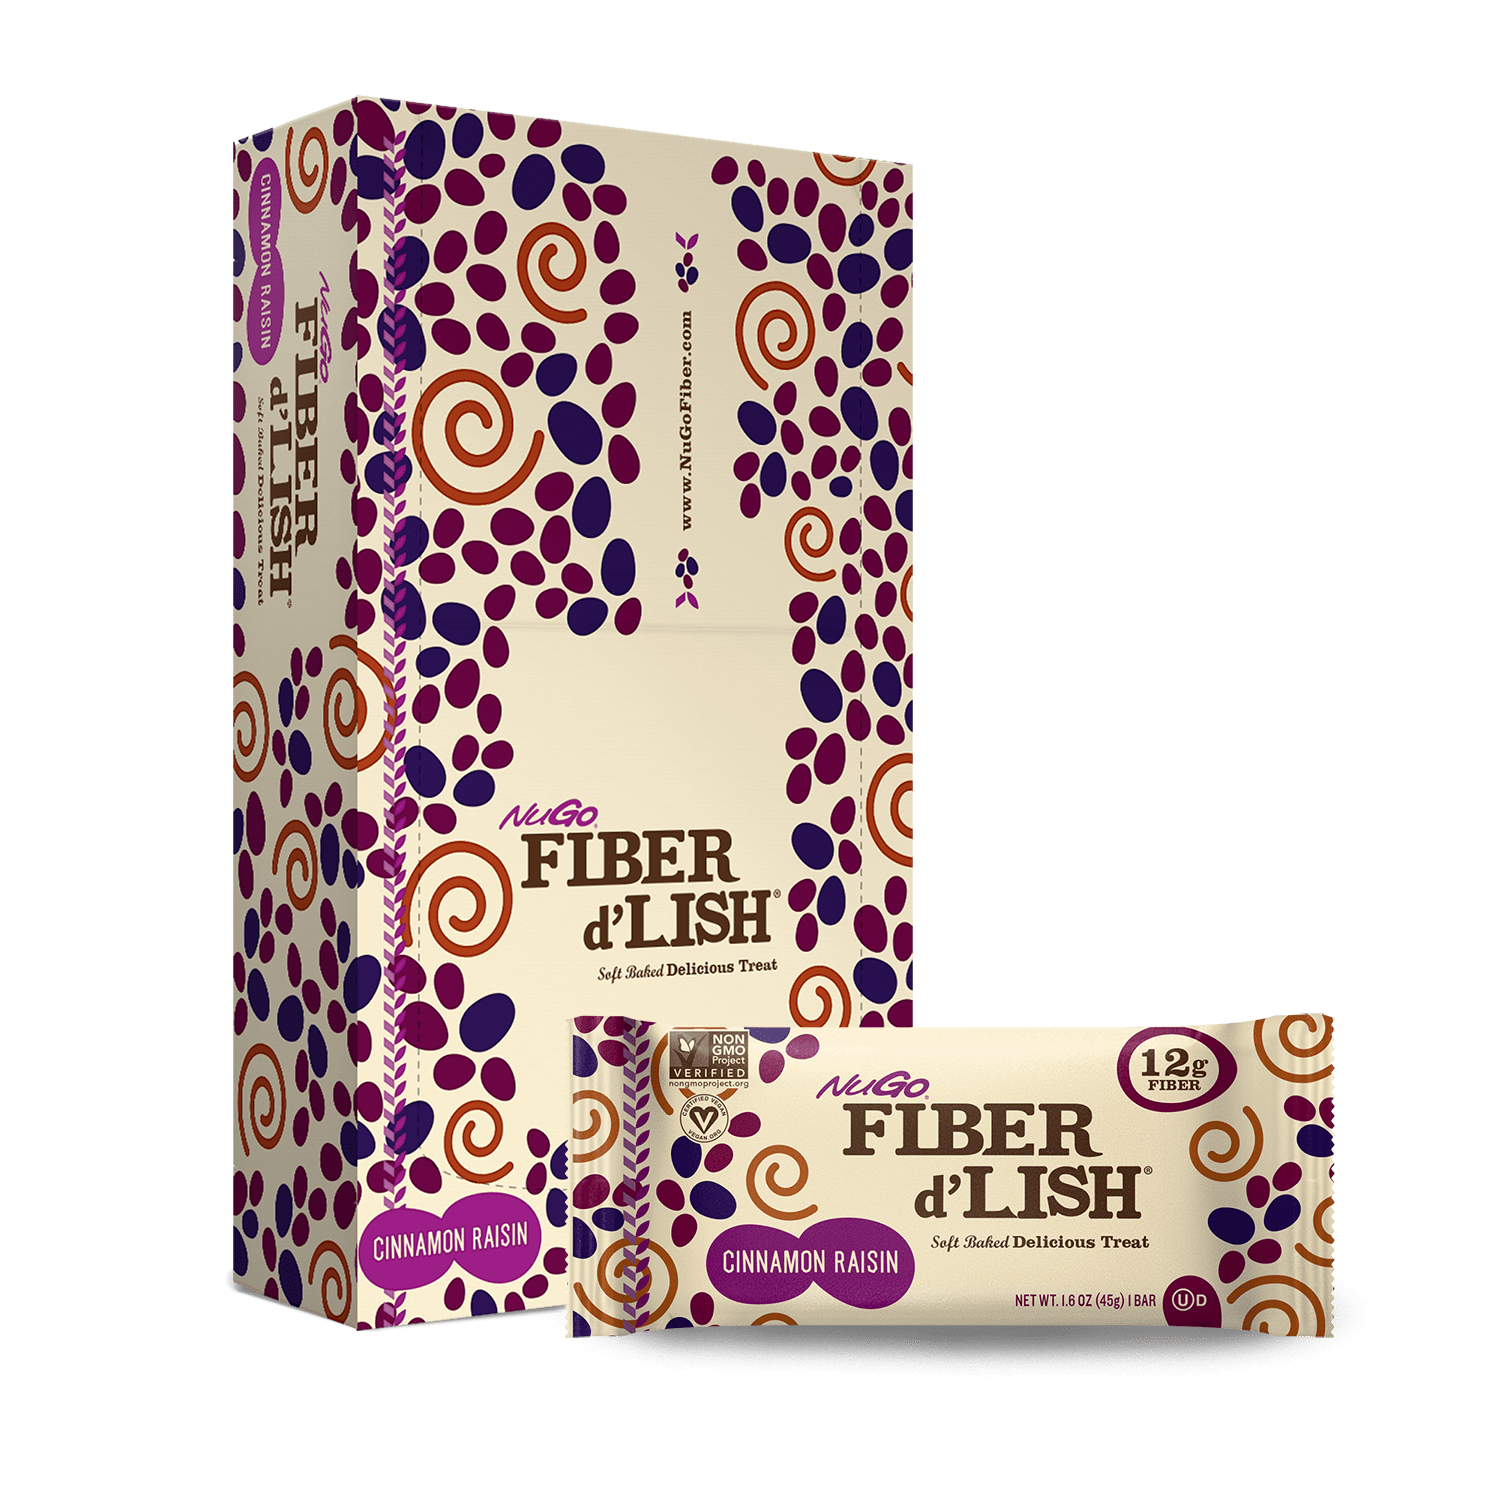 NuGo Fiber d'Lish Cinnamon Raisin Bar and Box